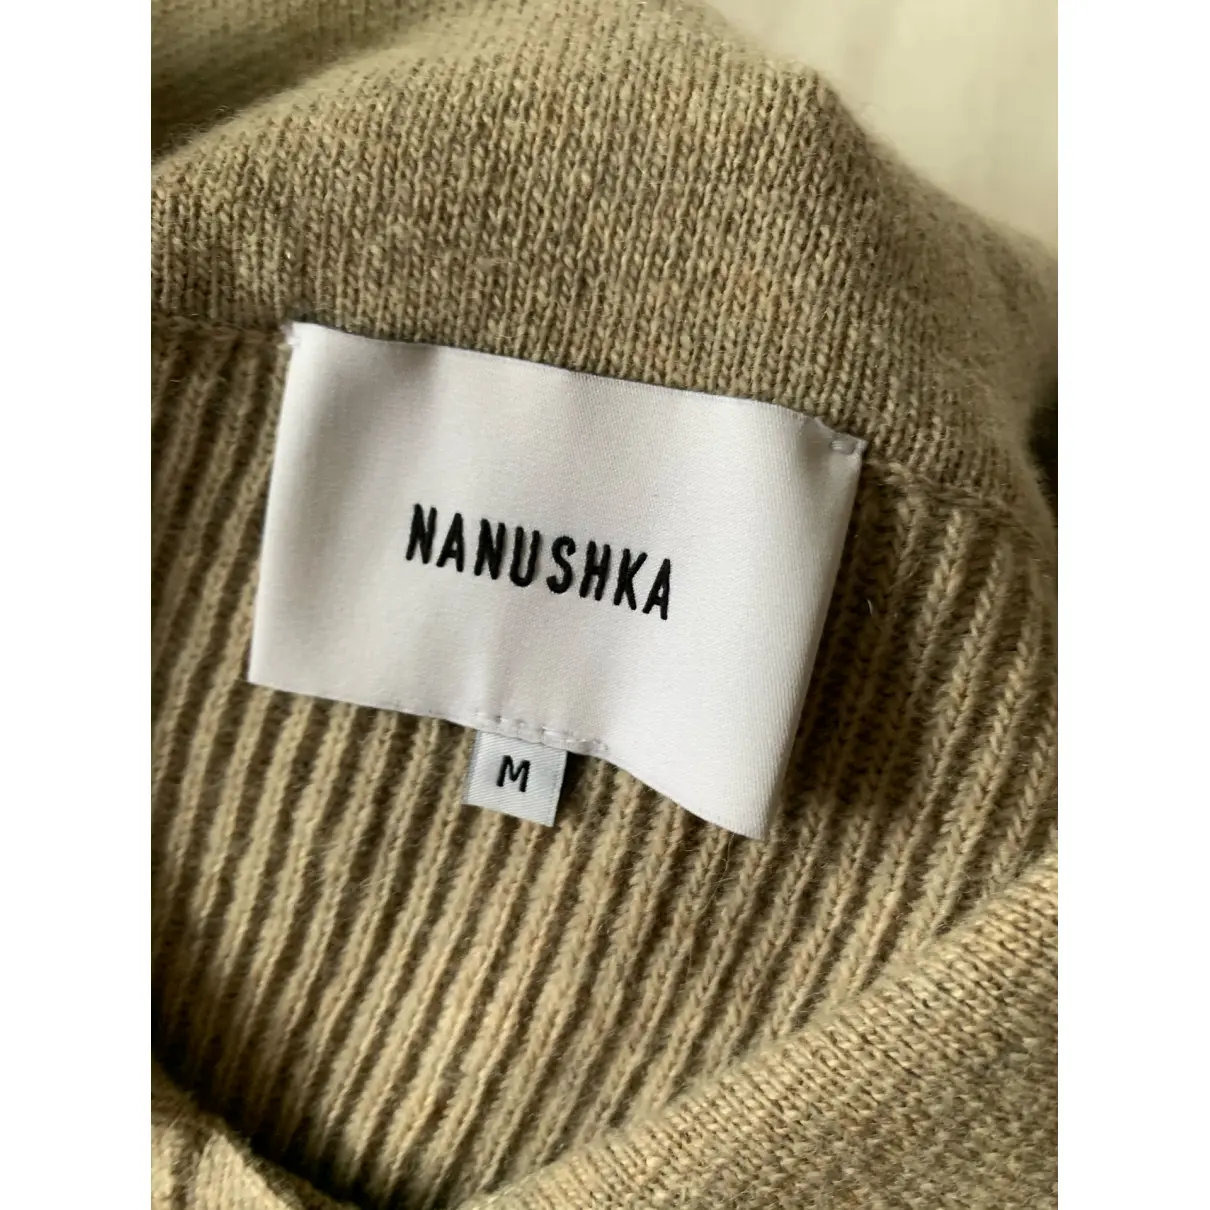 Buy Nanushka Cashmere maxi dress online